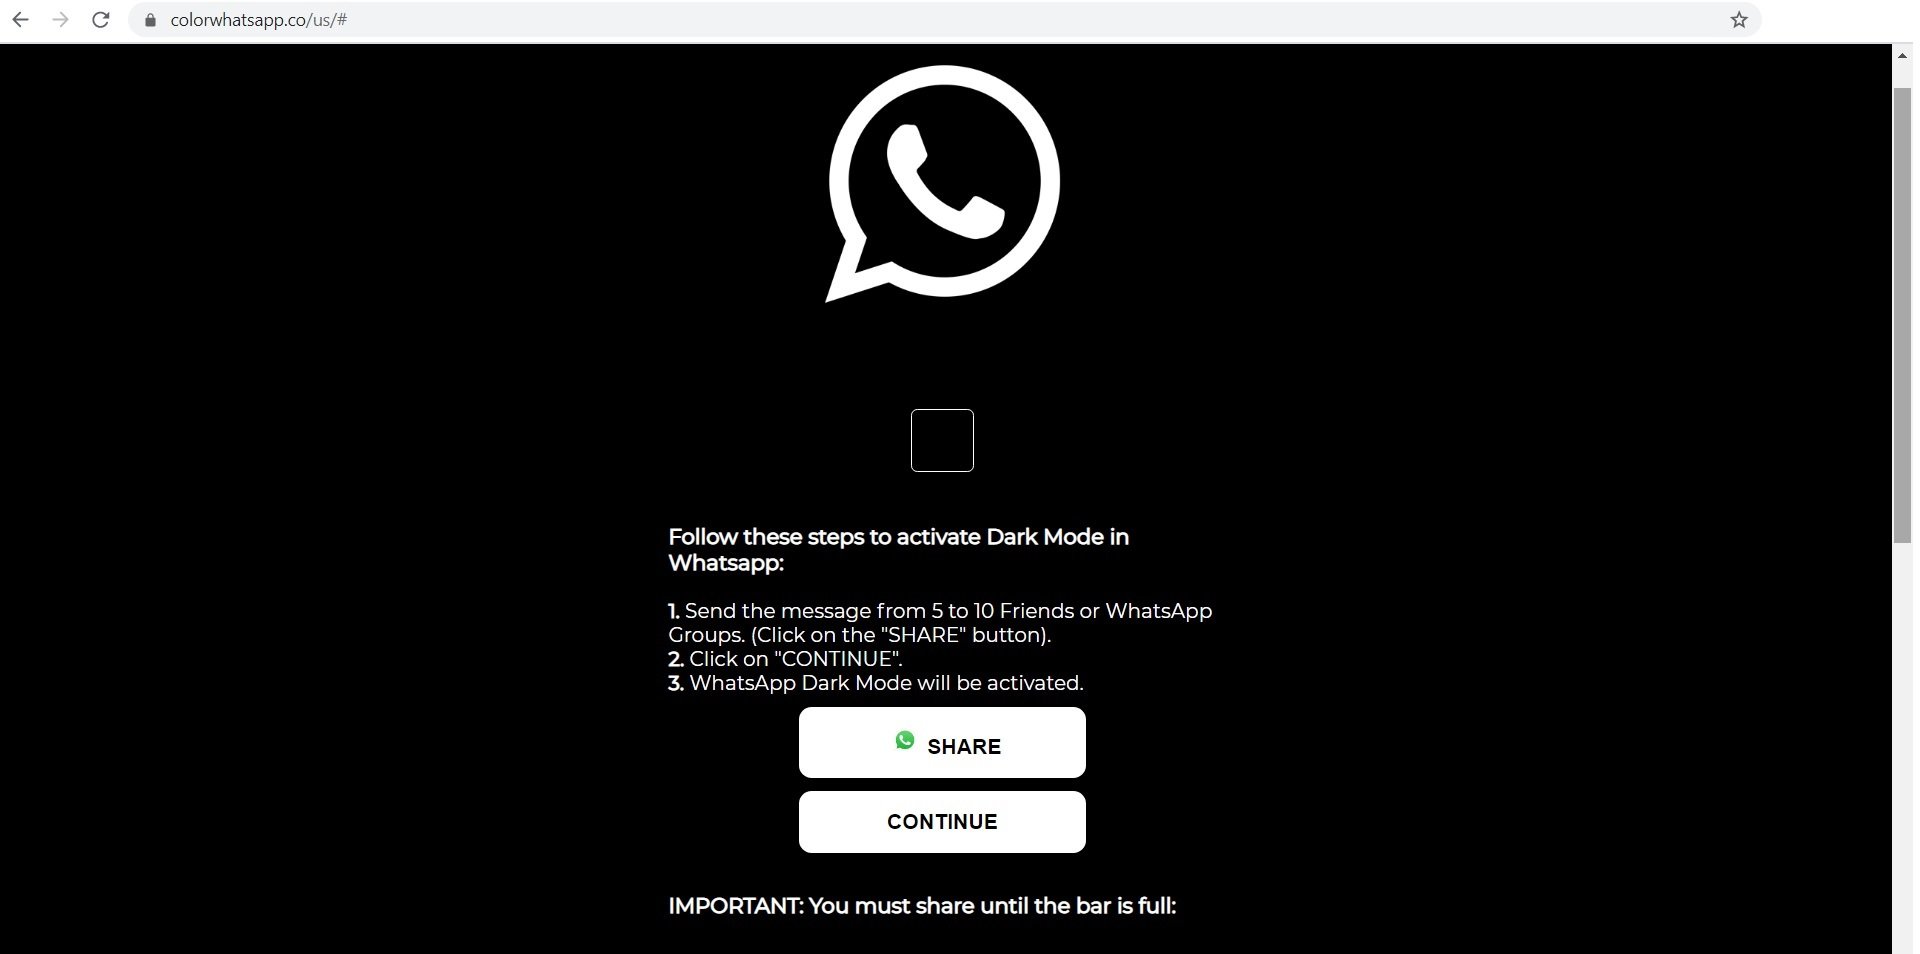 The WhatsApp Switch to Dark Mode Scam